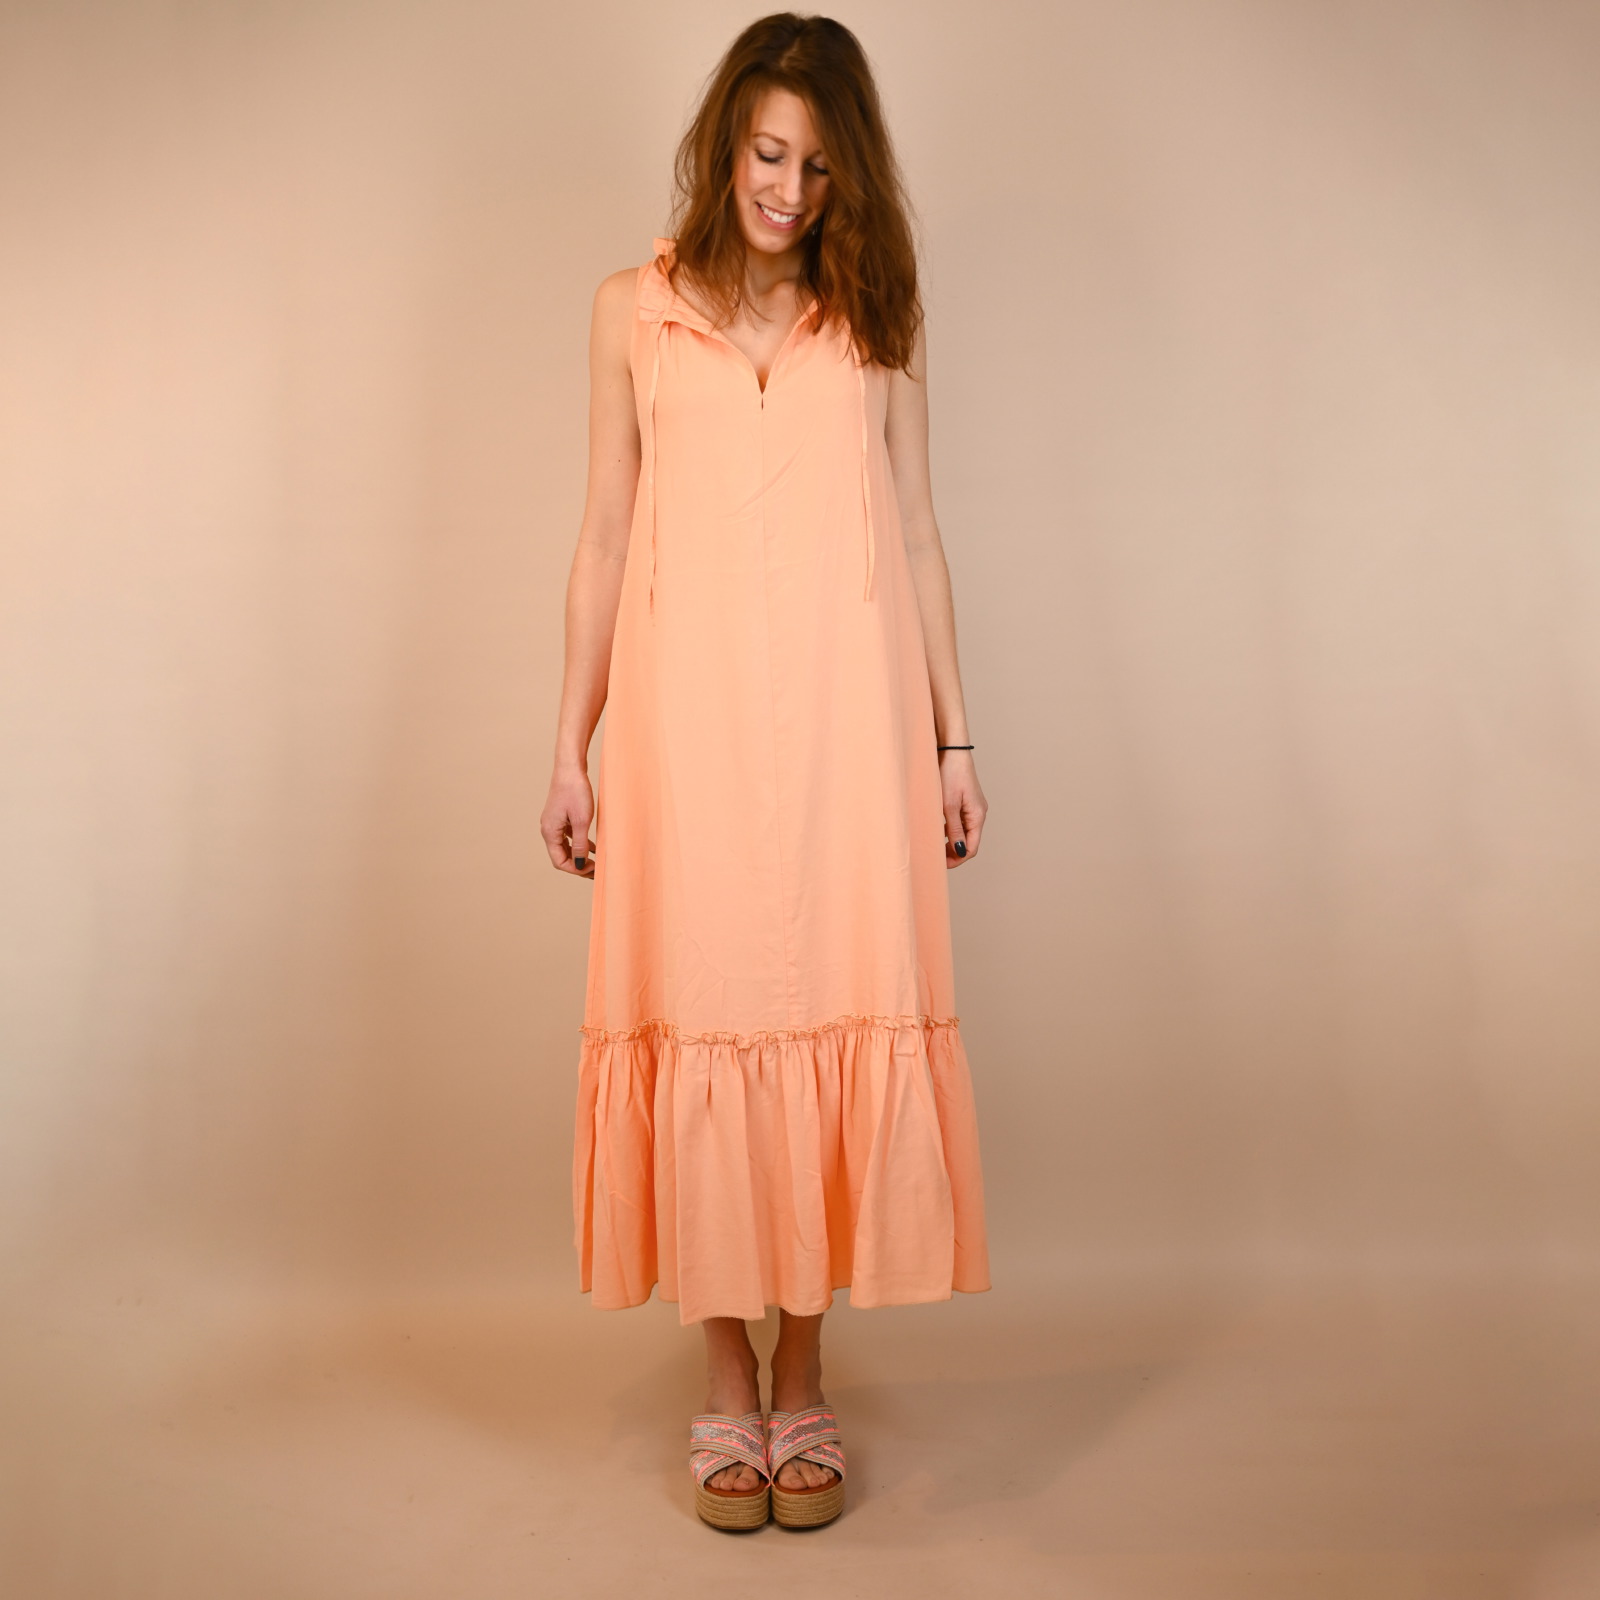 TRUE RELIGION Kleid sleeveless dress peach